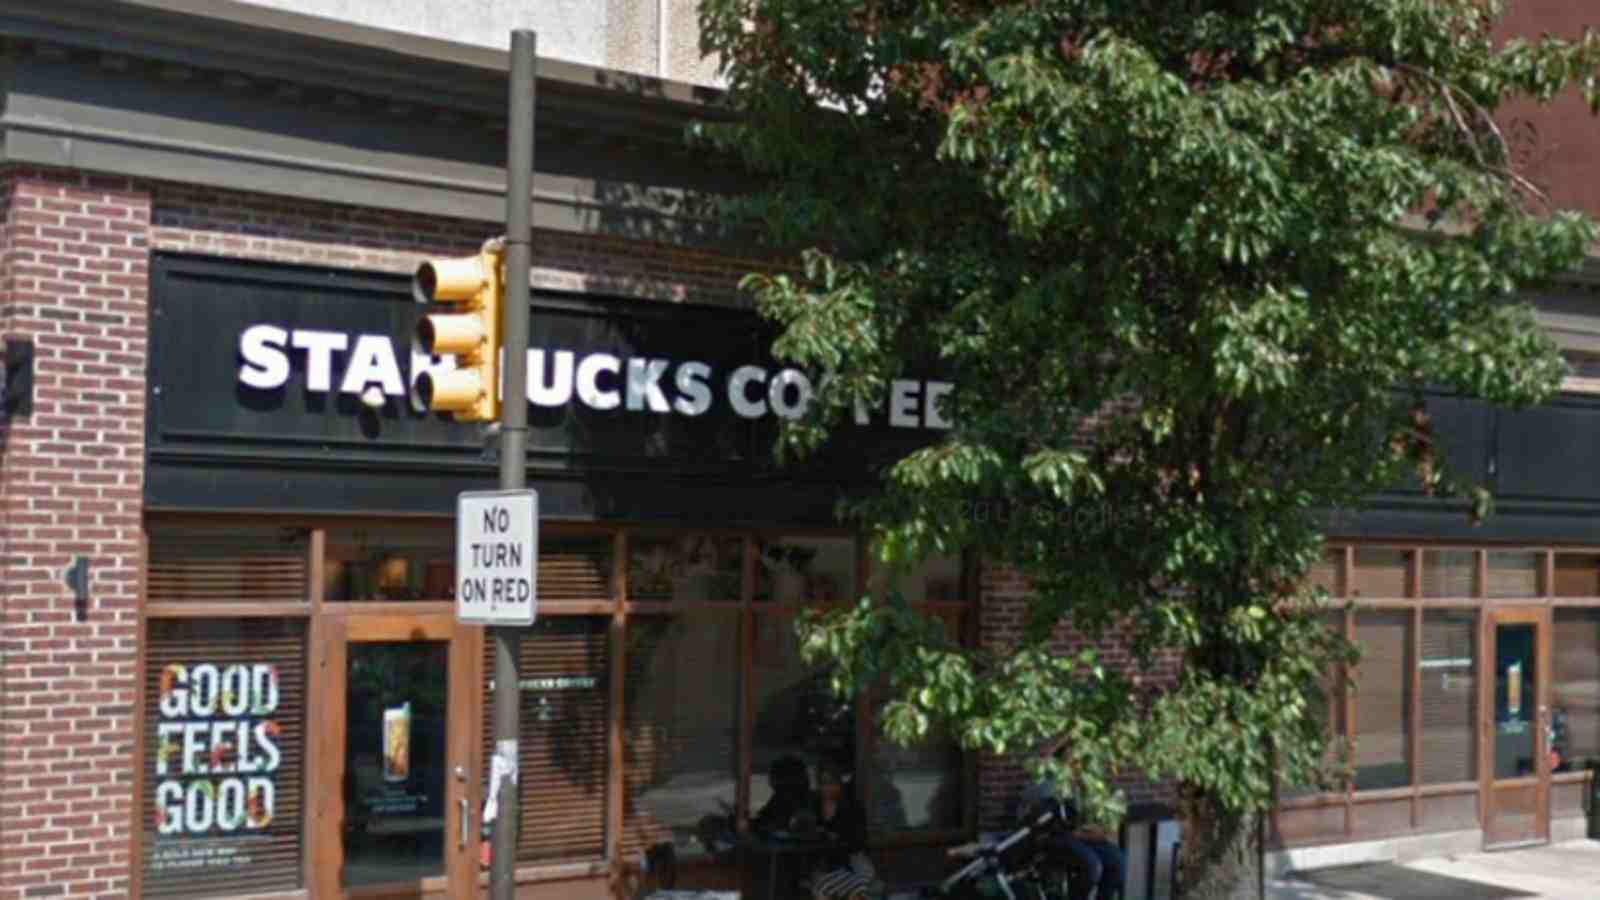 Image of Starbucks shop.